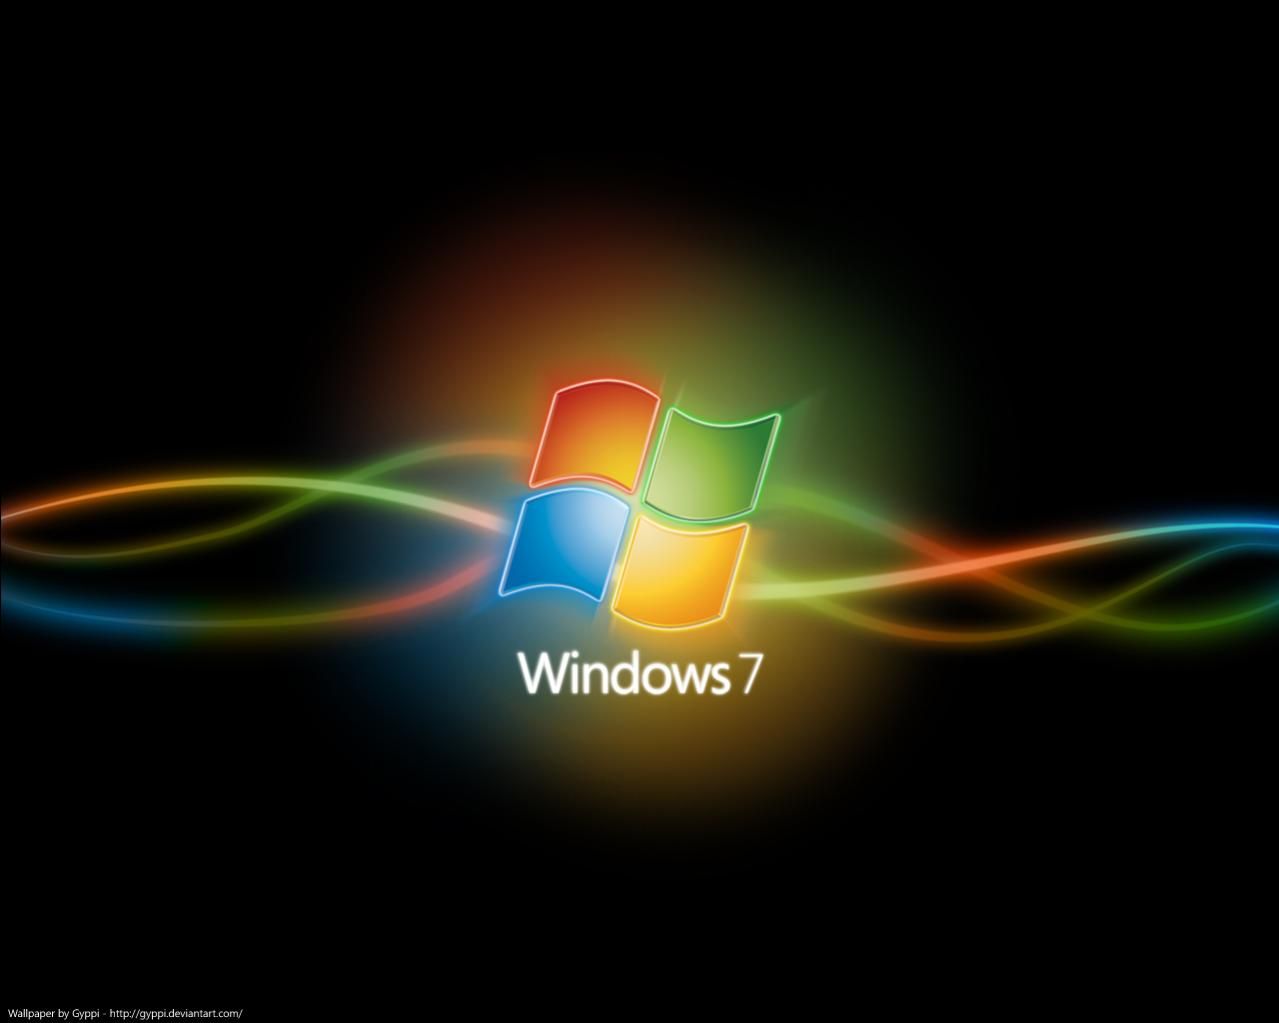 Windows 7 Desktop Screenshots | Page 4 | Windows 7 Forums